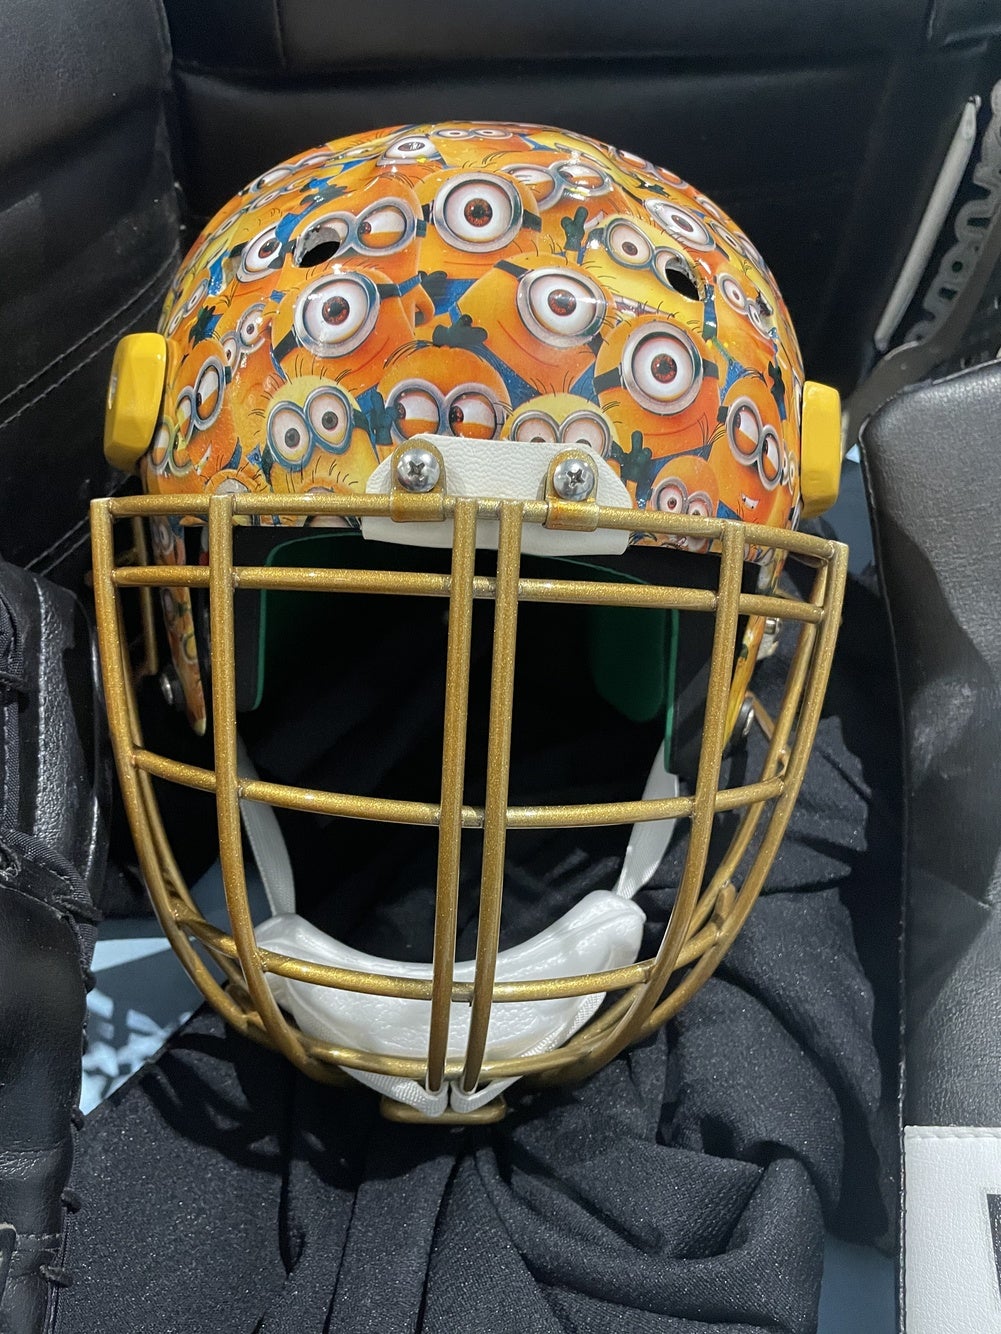 Senior Used Goalie Mask armadillo b13 from goalie collector Pro